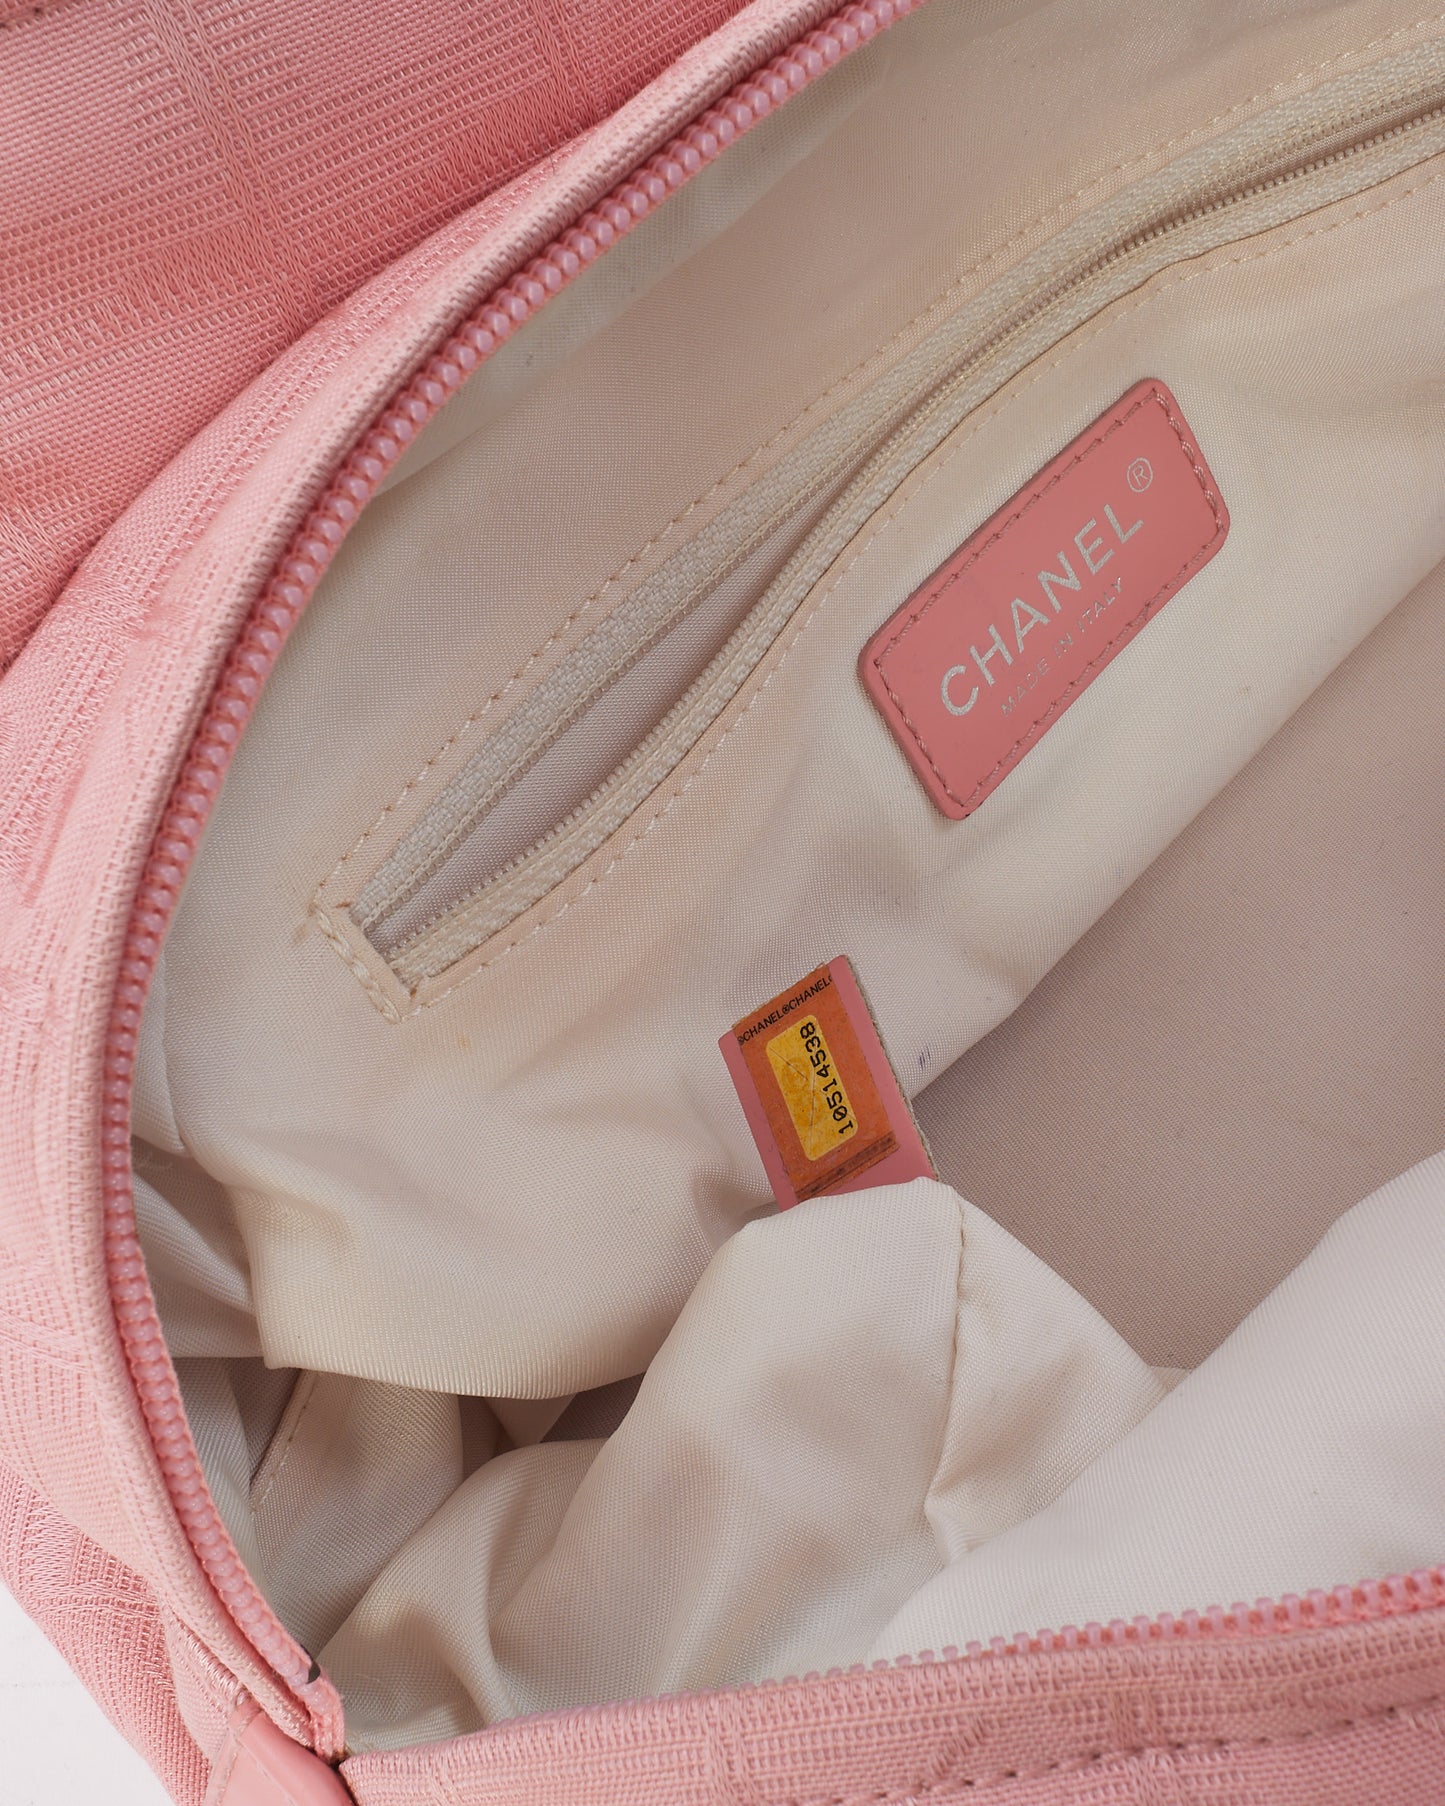 Chanel Vintage Pink New Line Canvas Logo Top Handle Bag